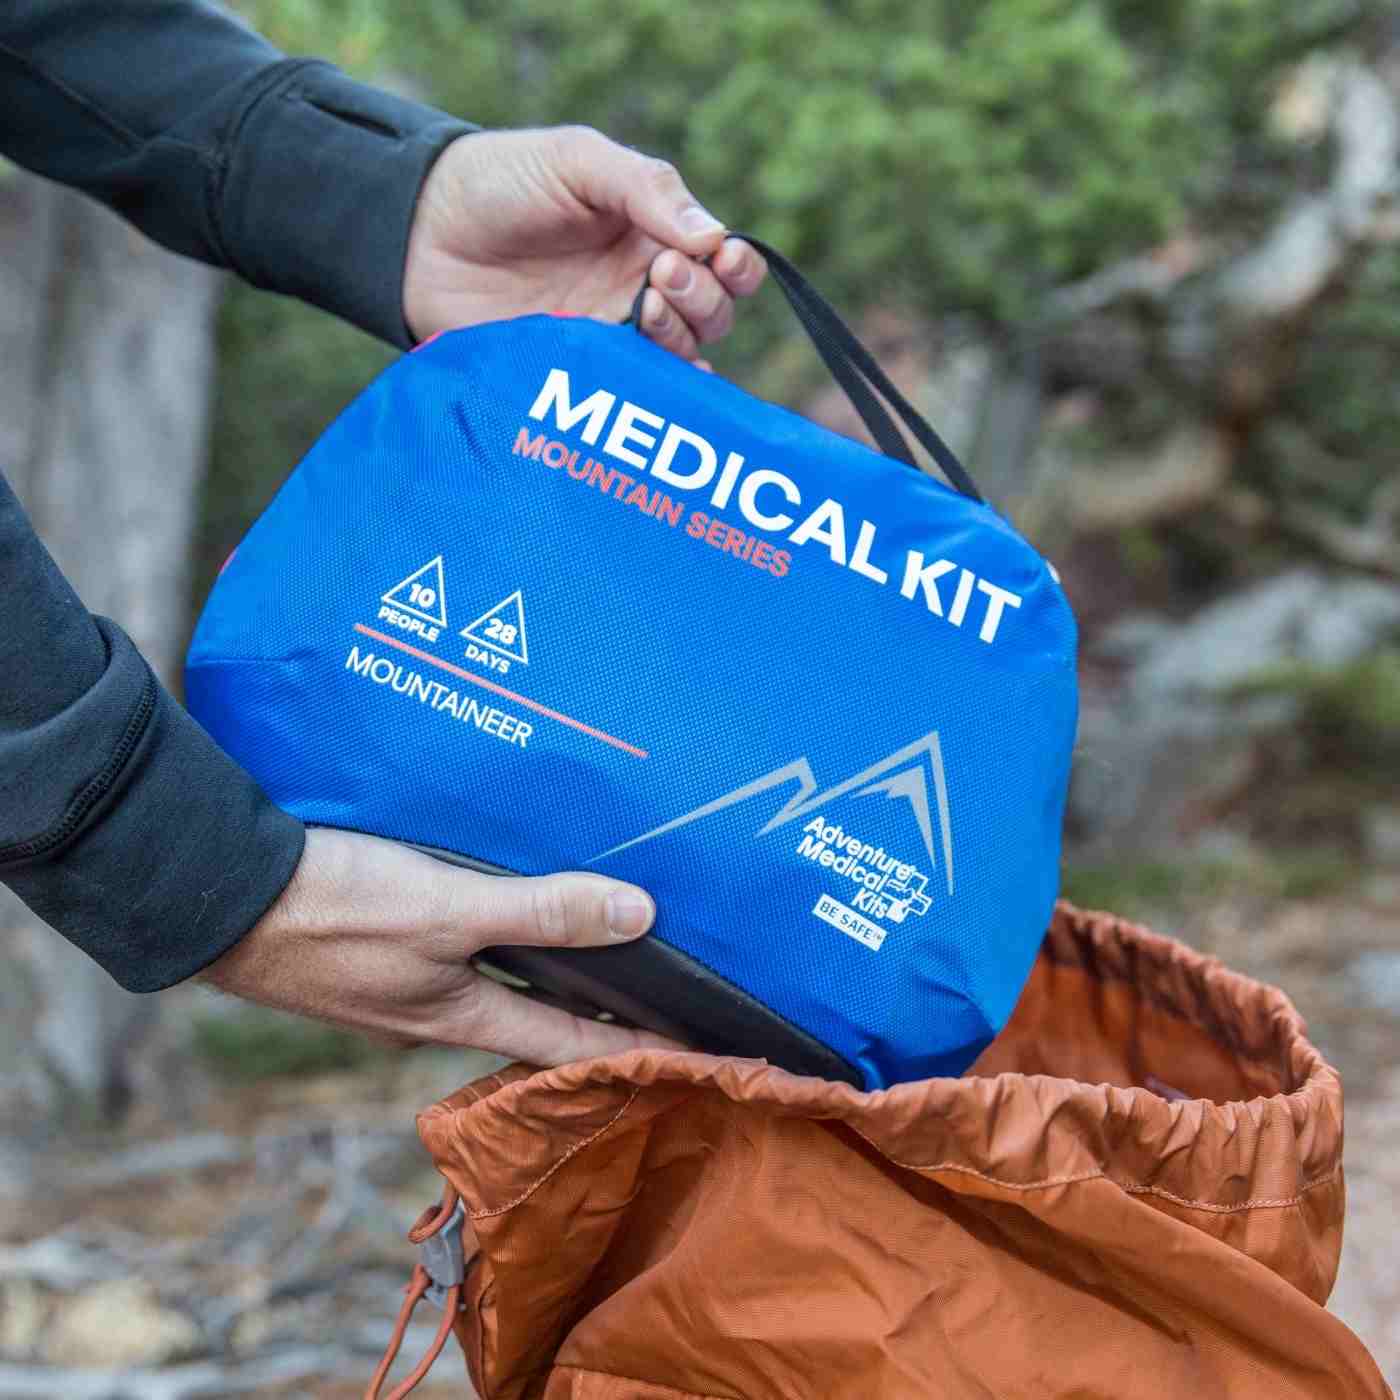 Mountain Series Medical Kit - Mountaineer pulling kit from orange backpack